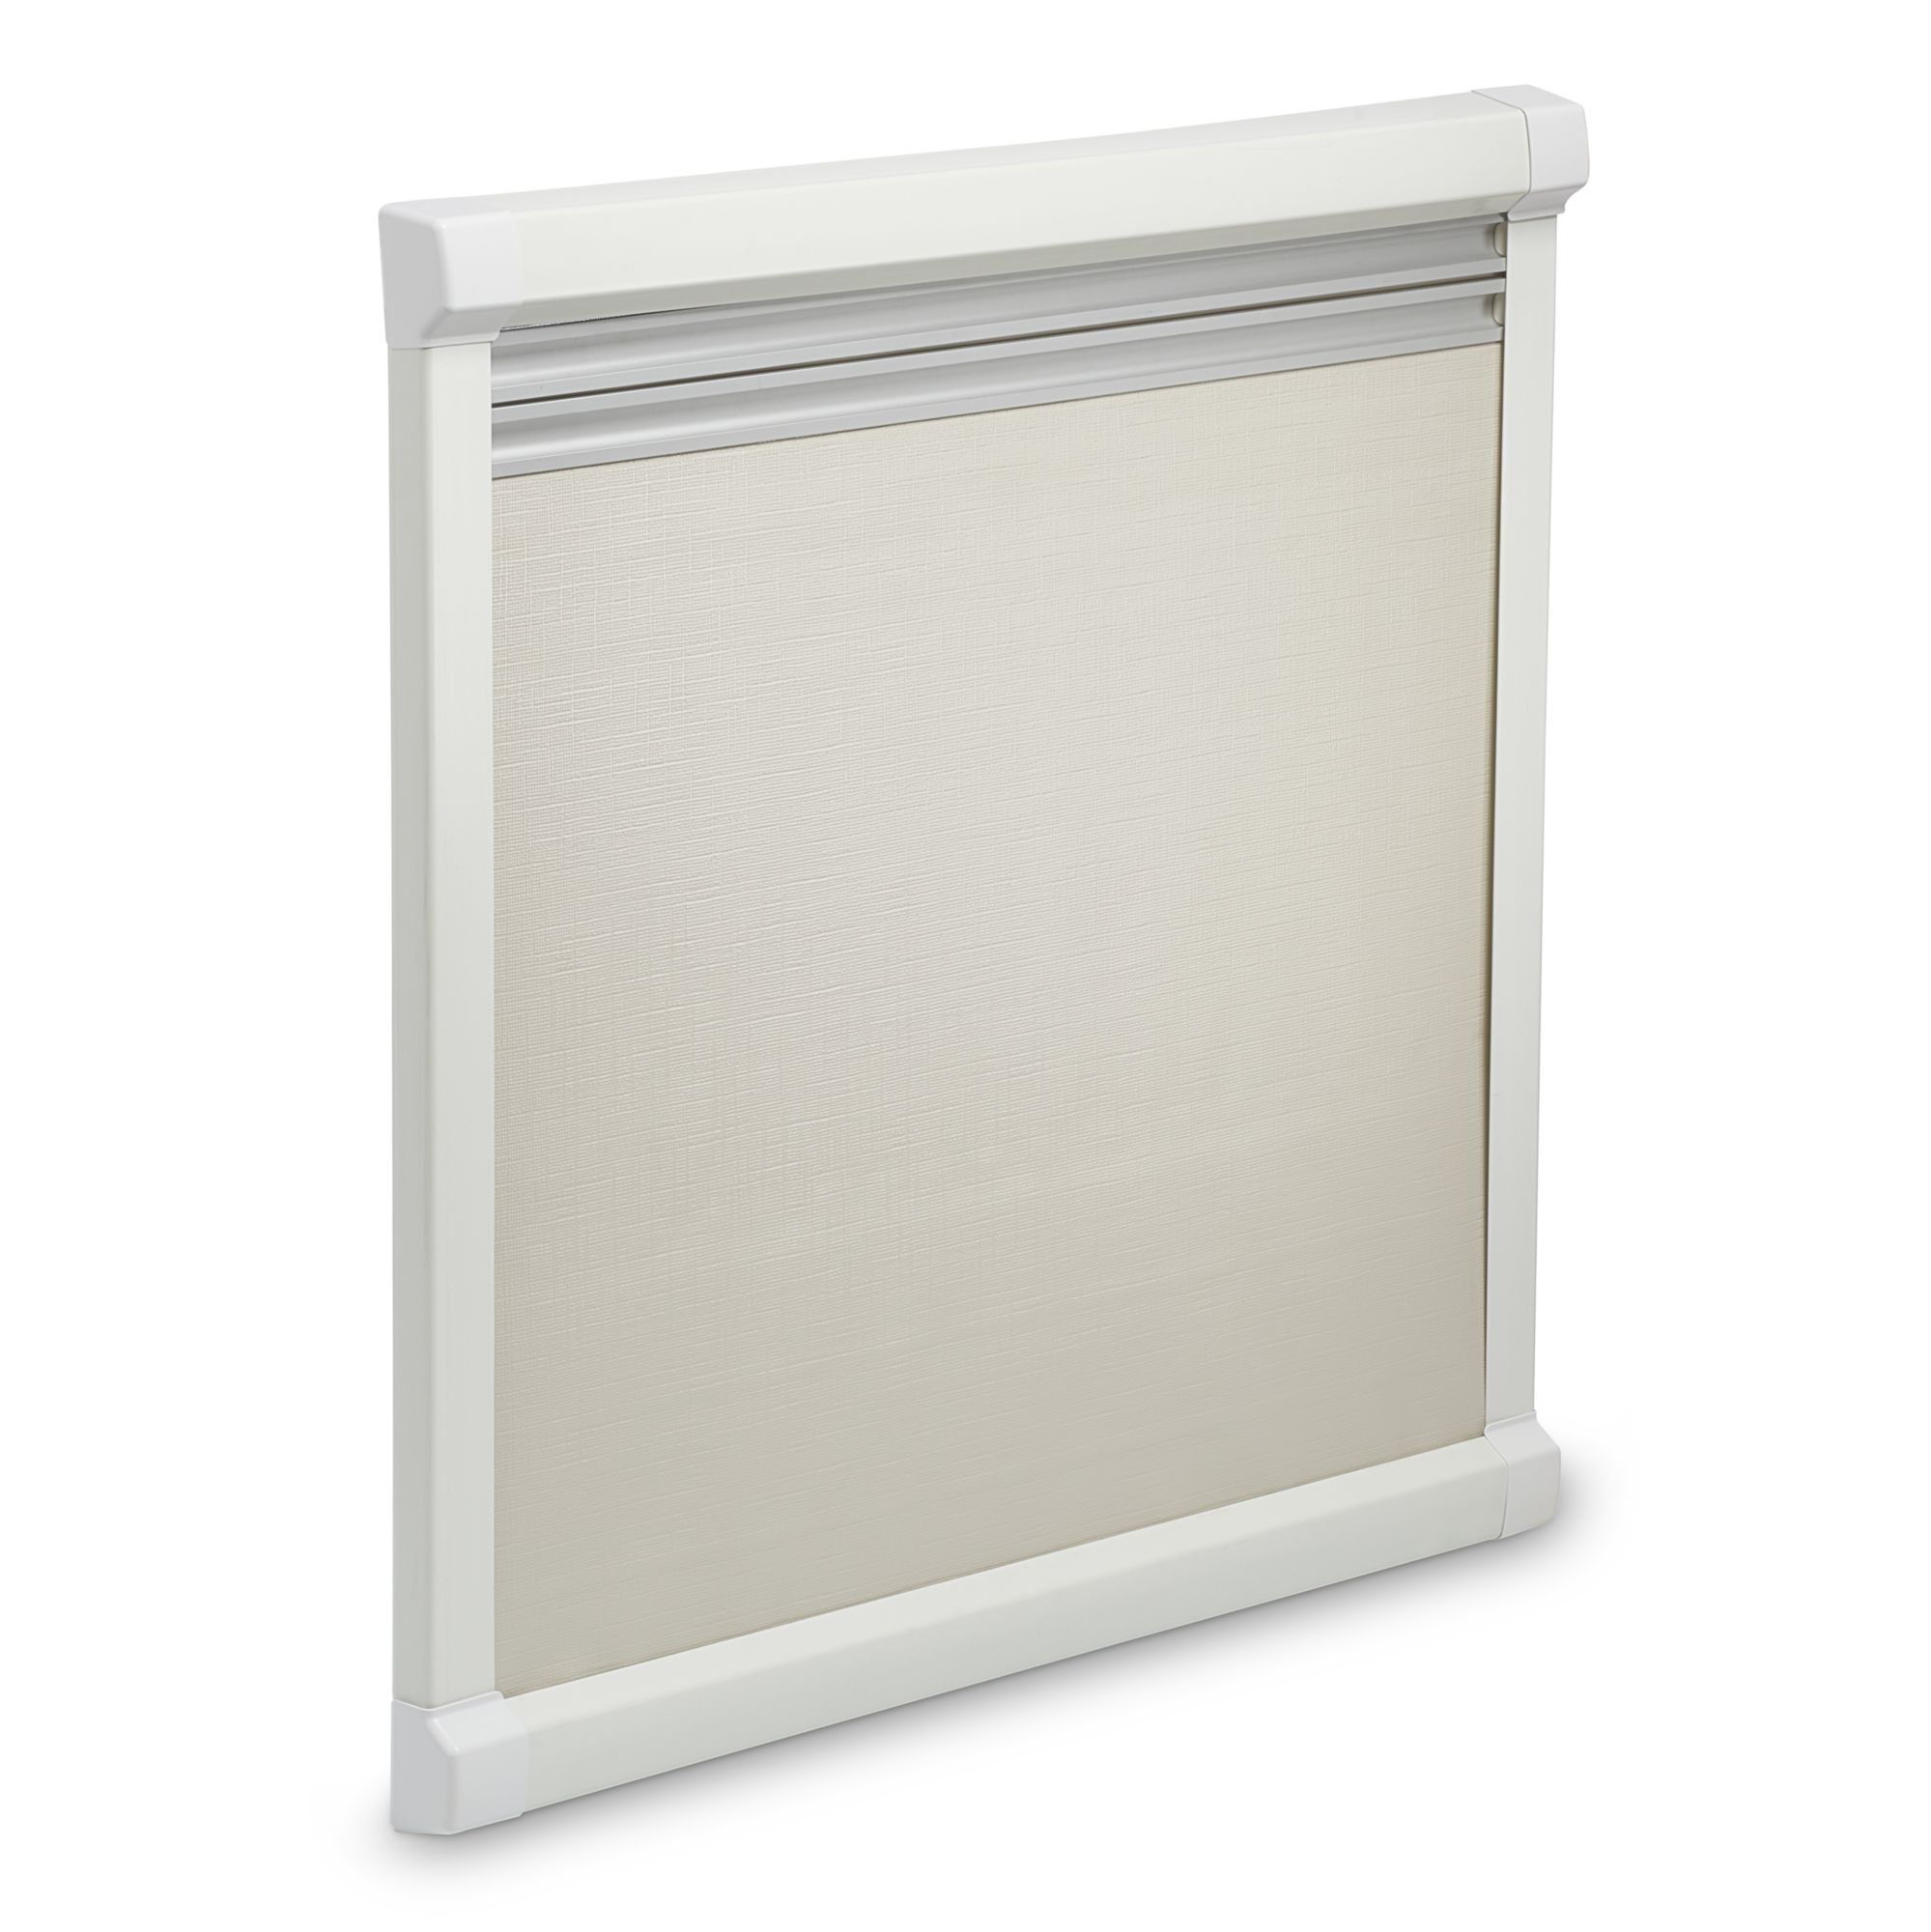 Dometic DB1R Window Roller Blind, 880 x 330 mm, cream-white